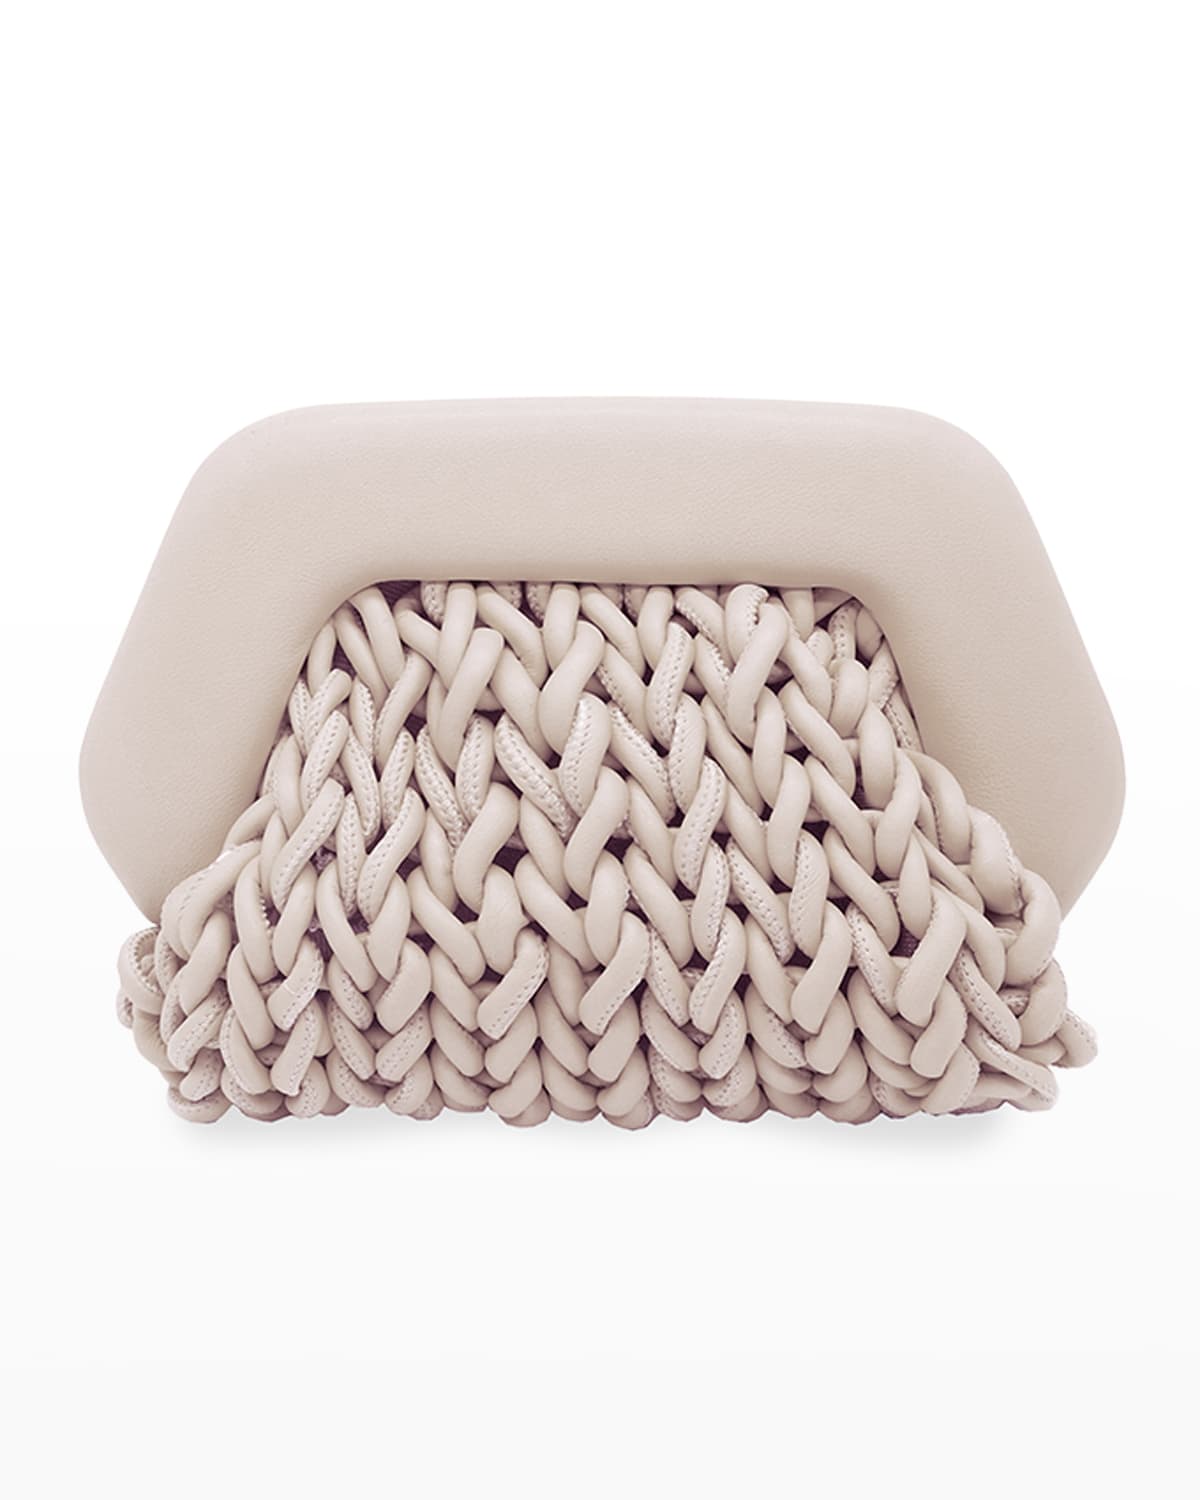 THEMOIRE Bios Knit Laminated Clutch Bag | Neiman Marcus